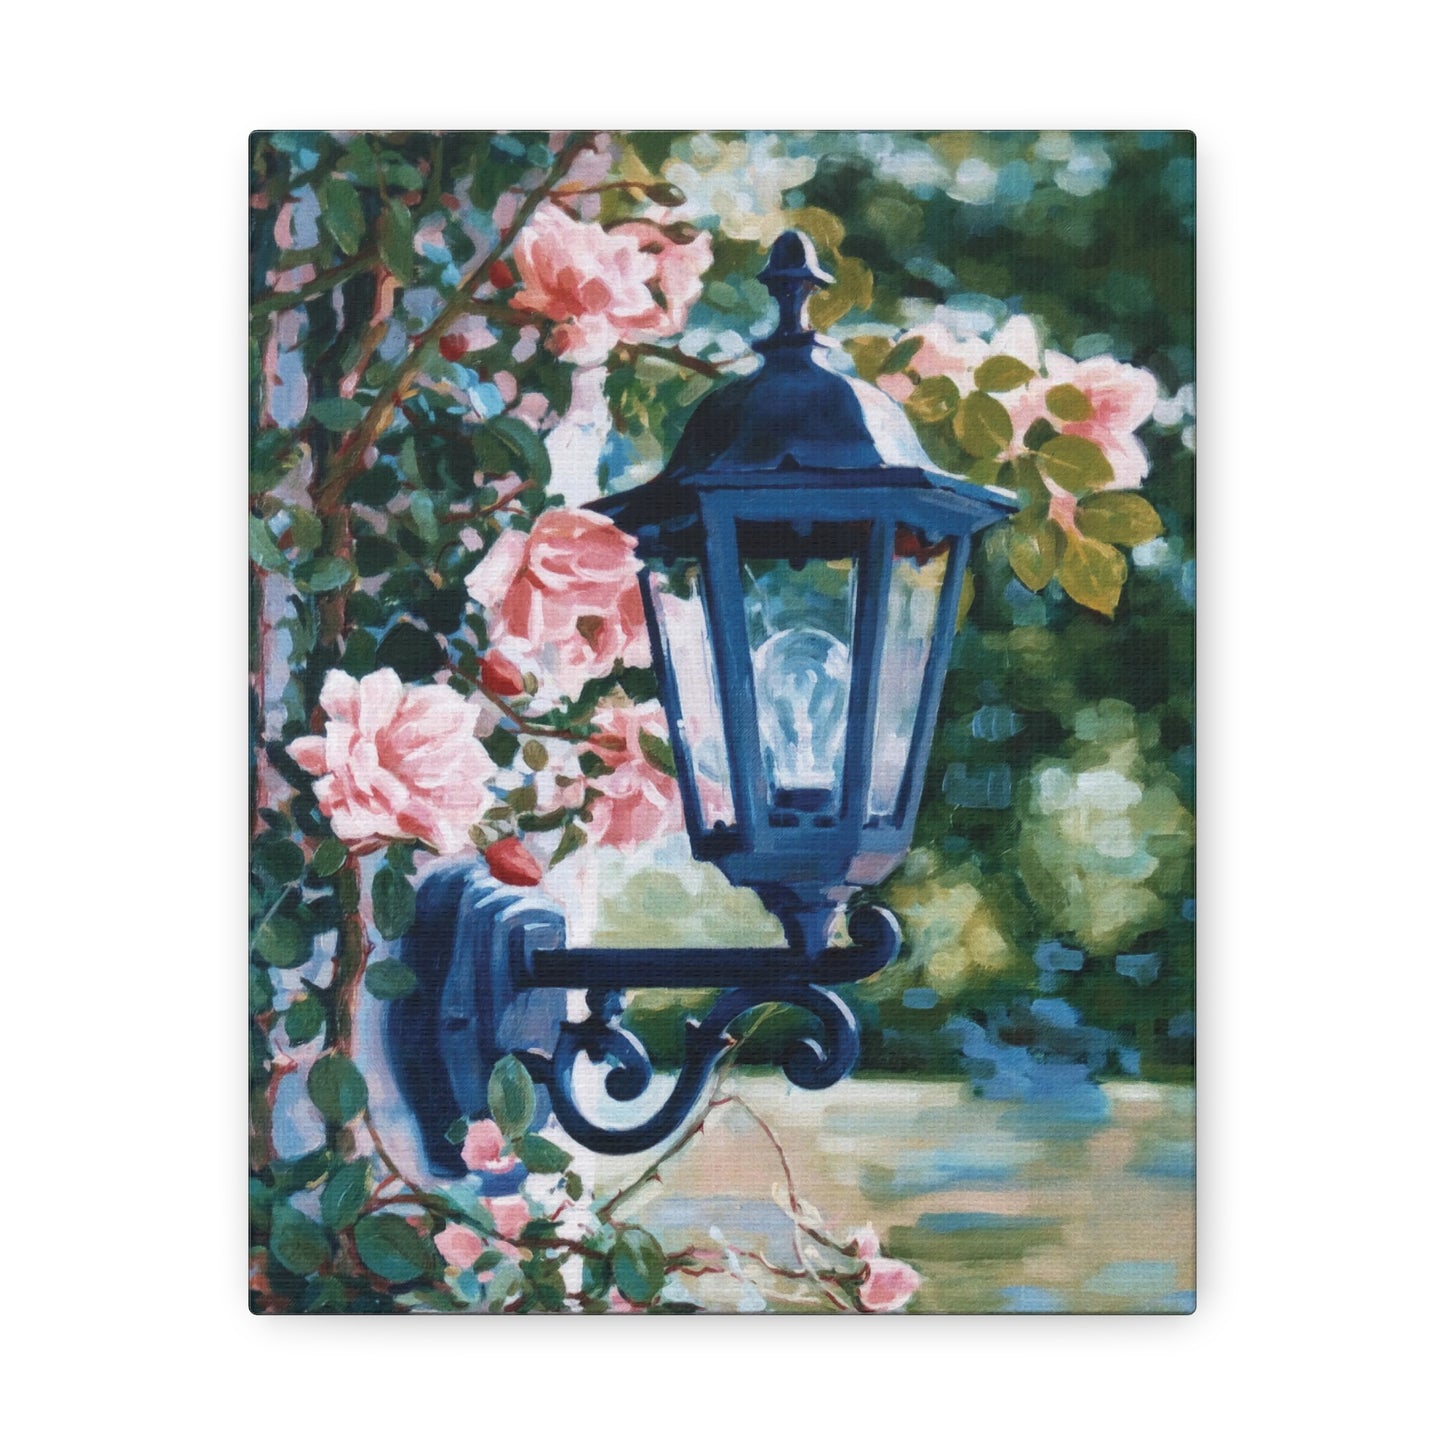 Romantic Fragrance - Canvas Print